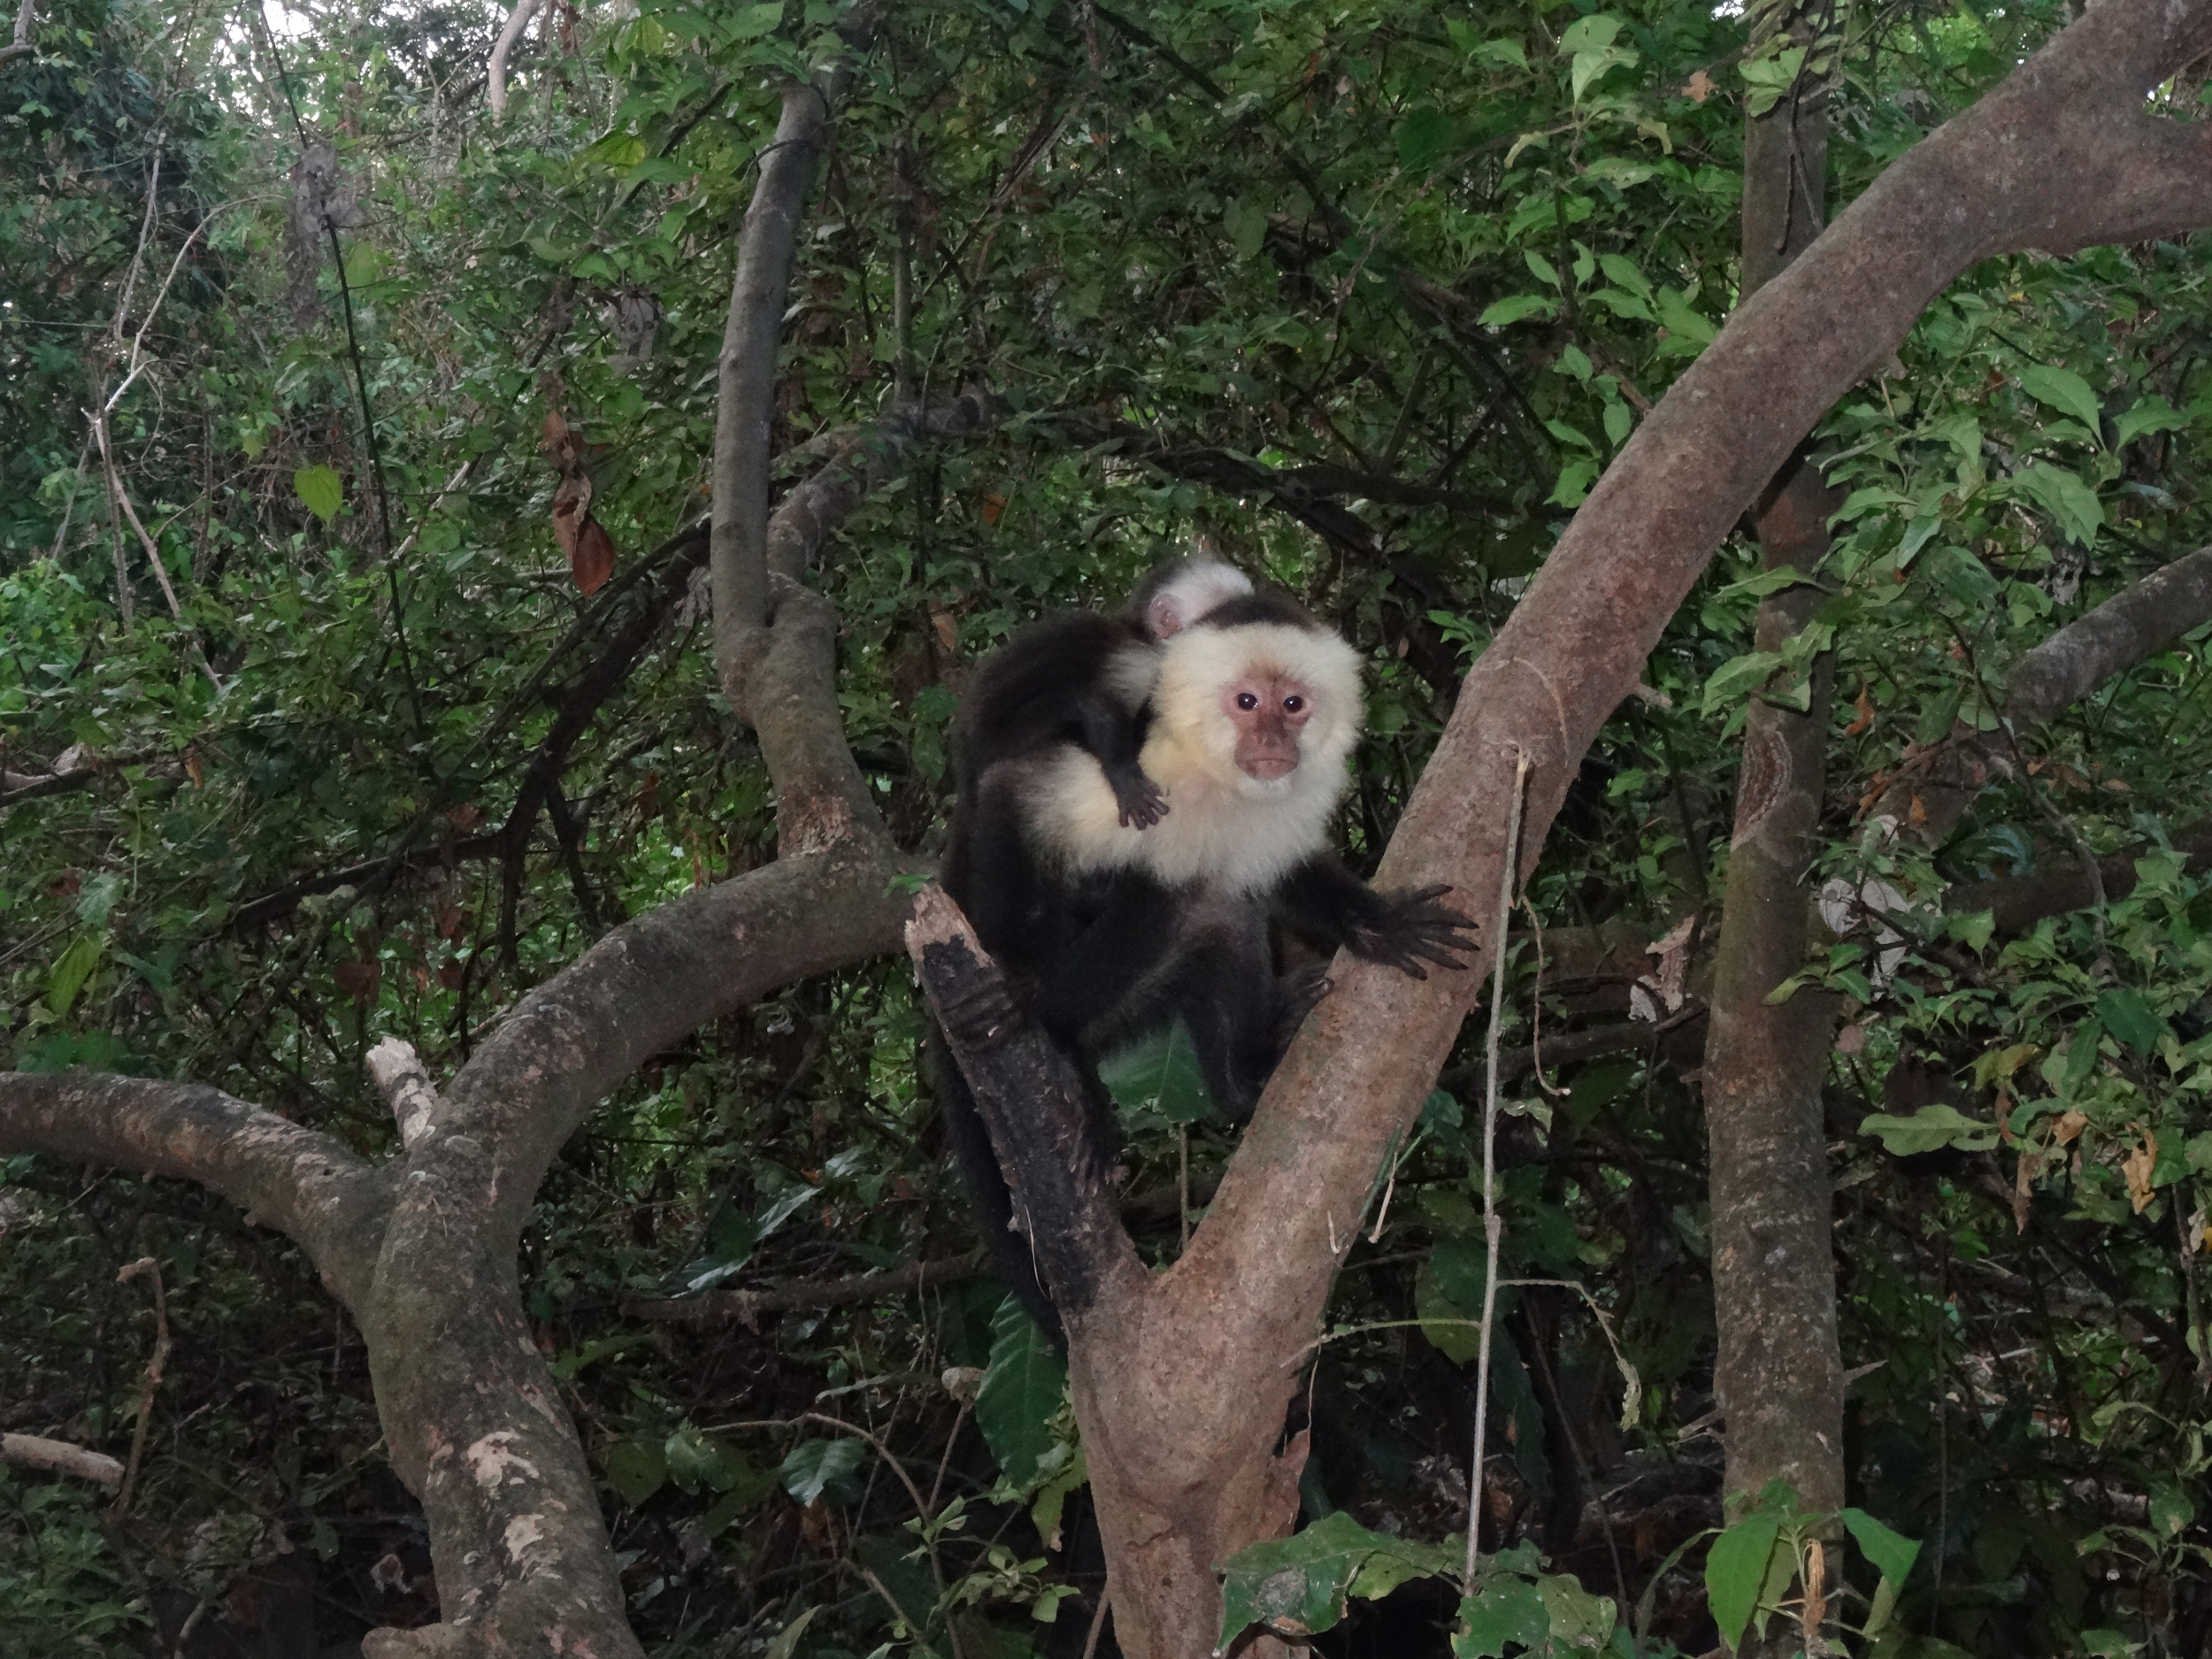 26. Mom and baby, Capuchin monkey